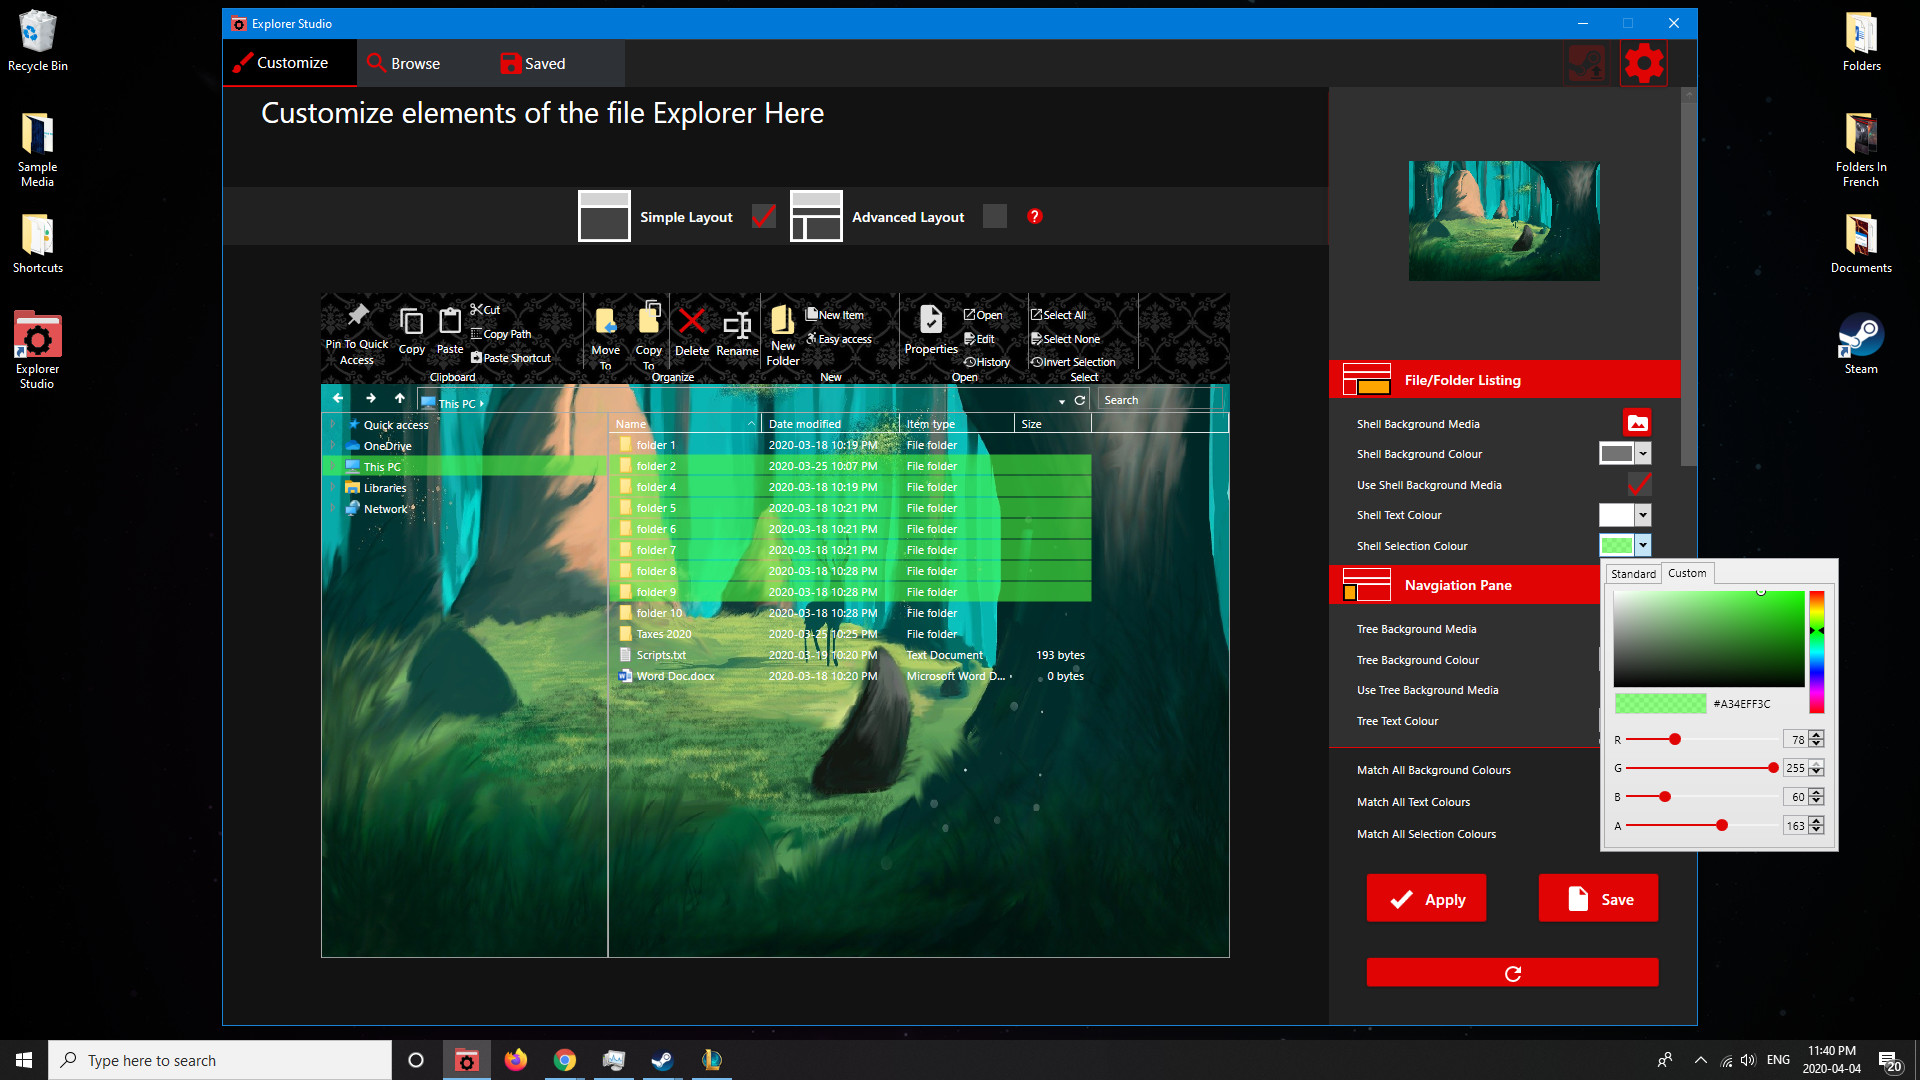 Explorer Studio screenshot